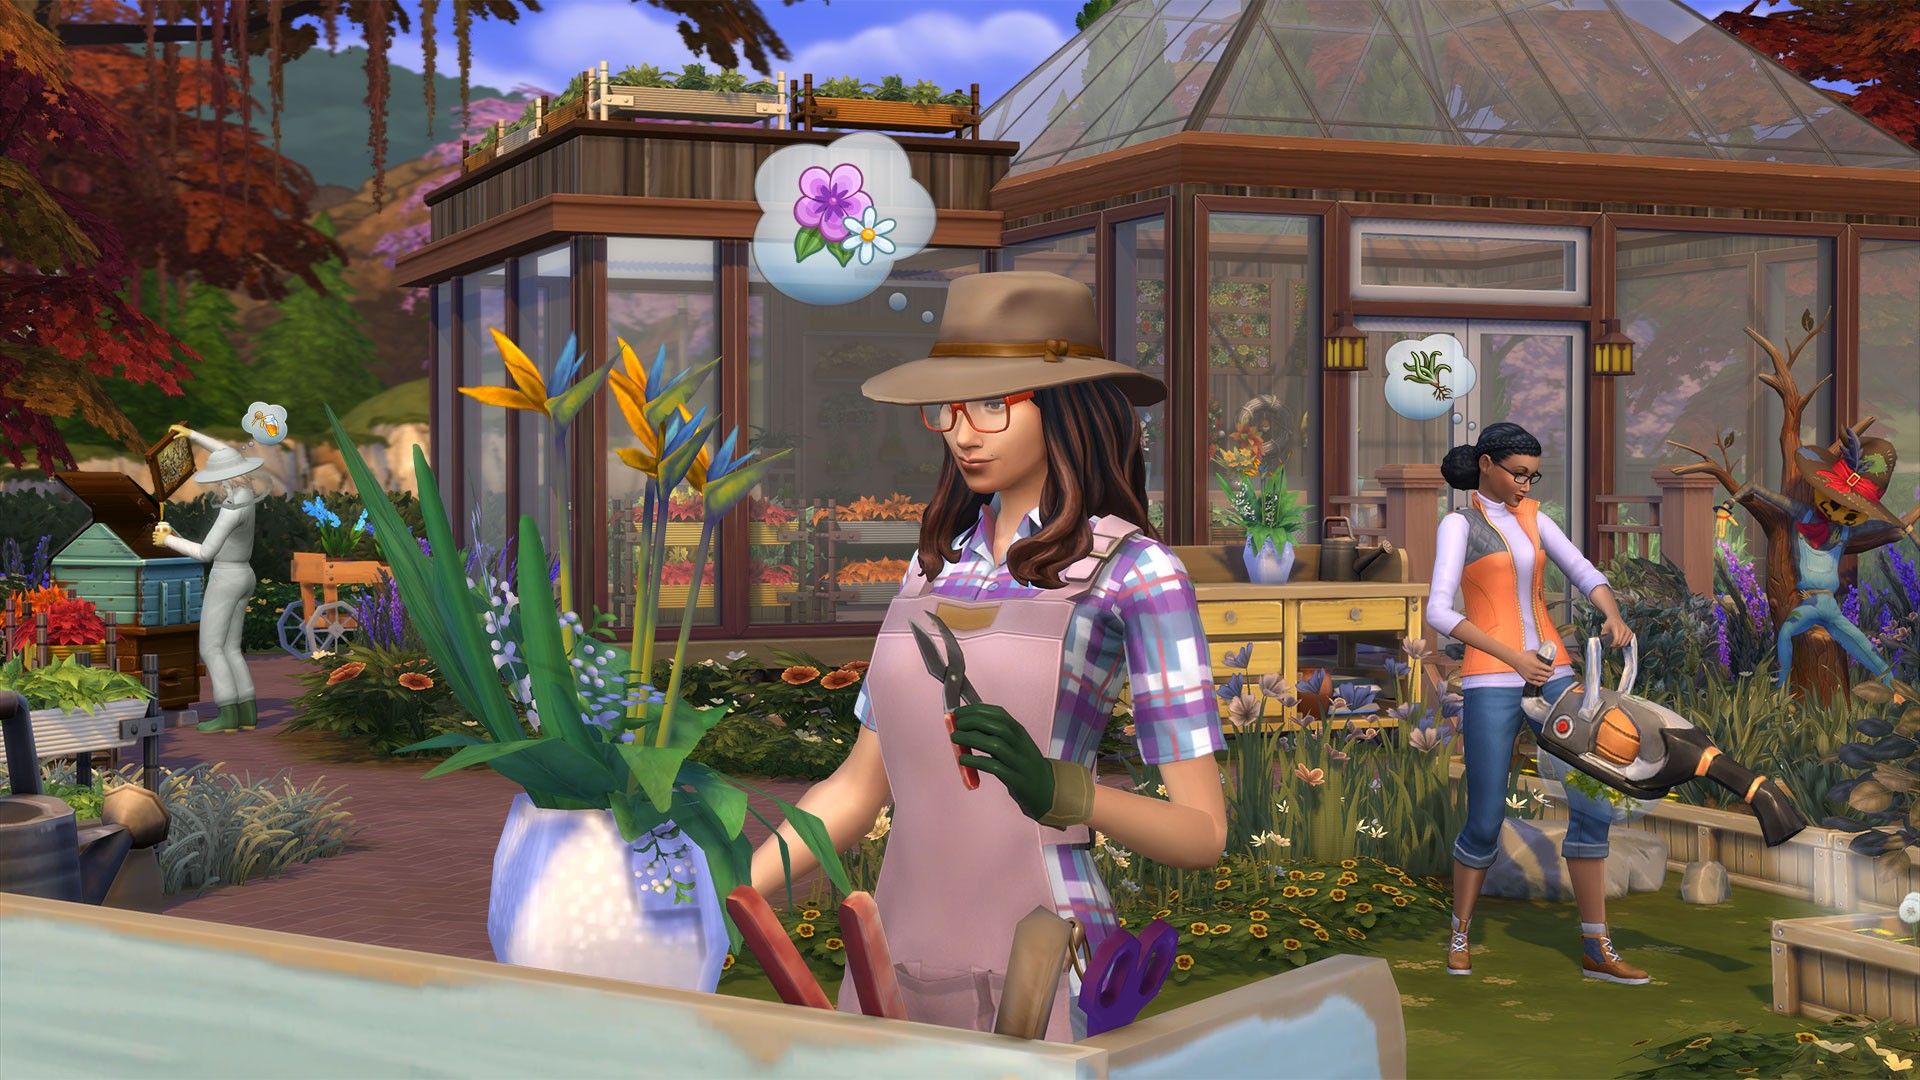 A sim flower arranging with other garden activity behind her.